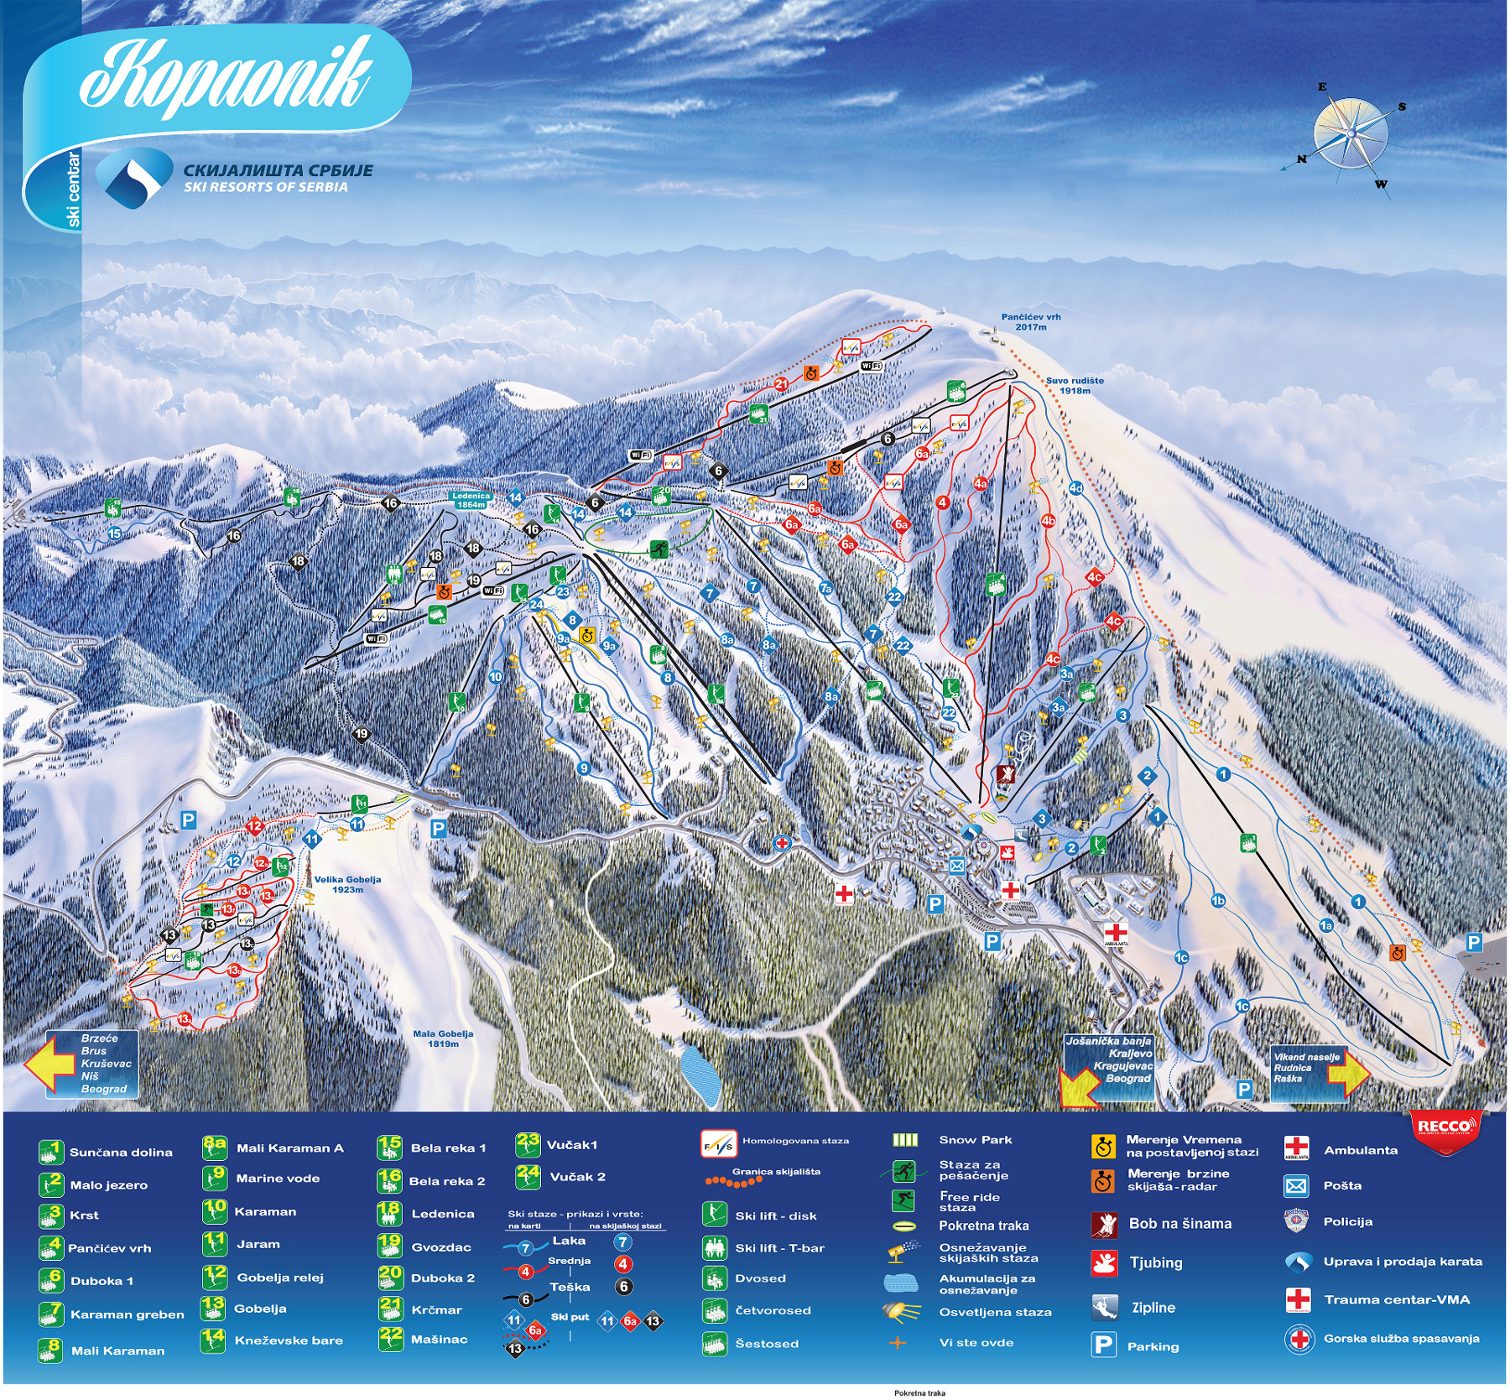 kopaonik mapa staza Mapa skijališta | Skijališta Srbije kopaonik mapa staza